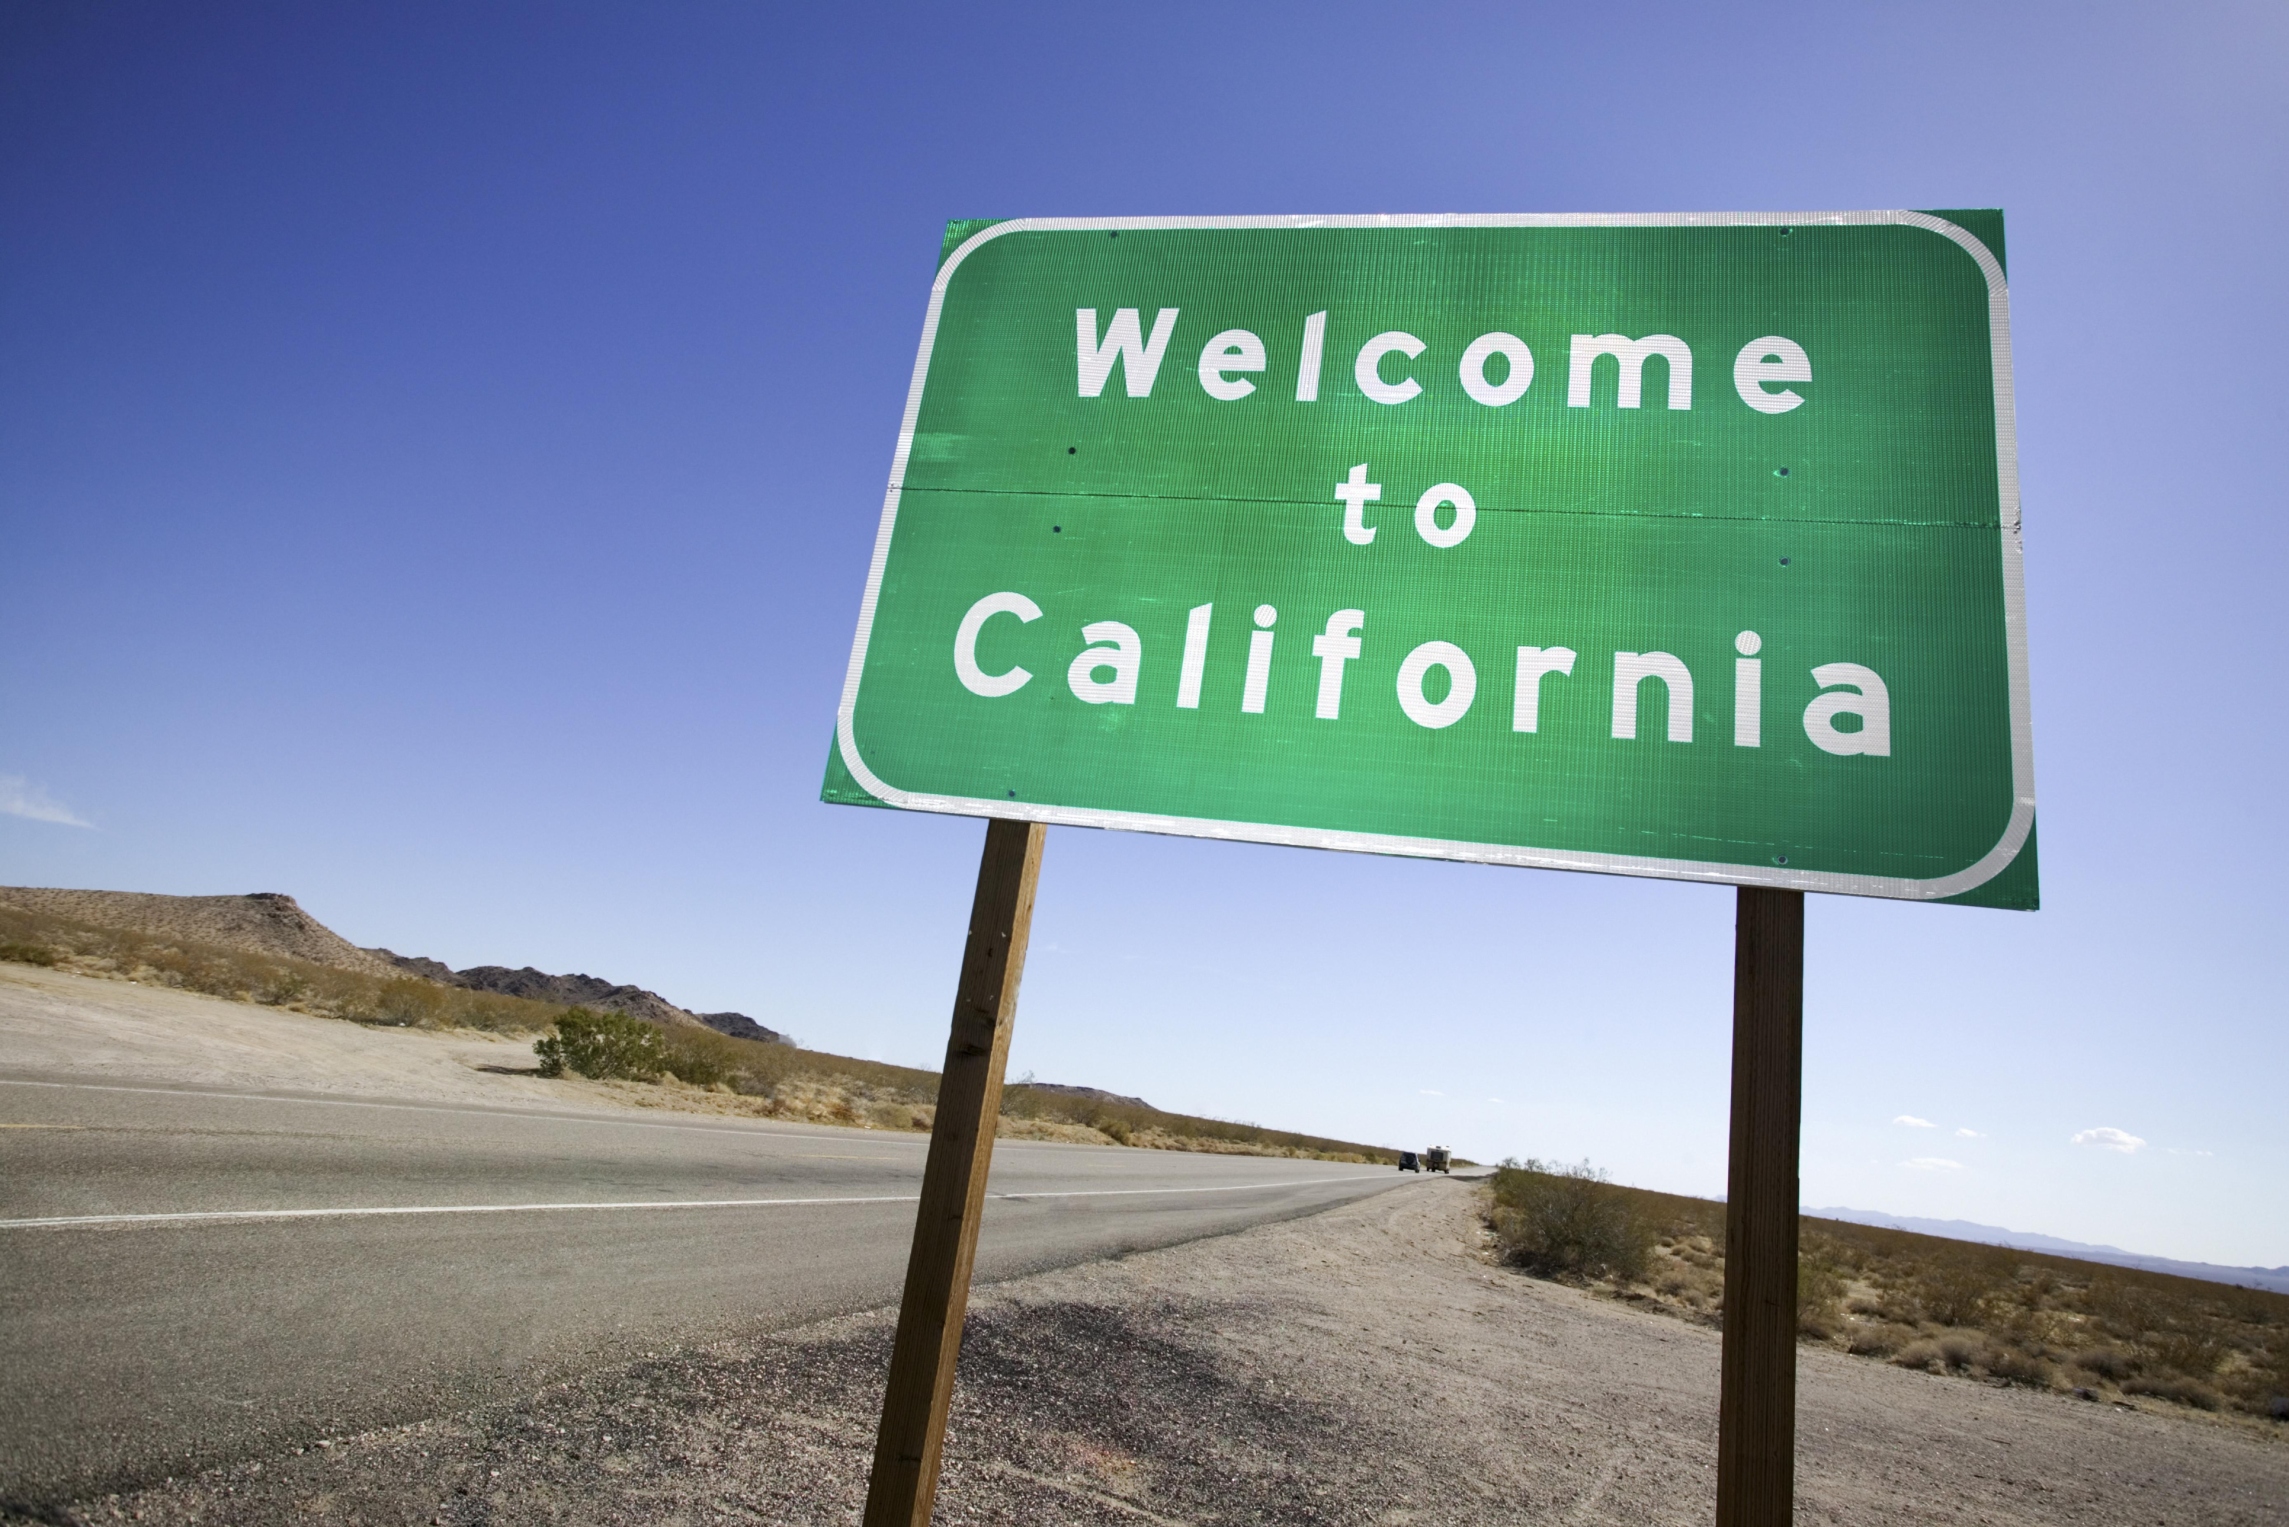 California assembly passes anti-drone bill, 63-6